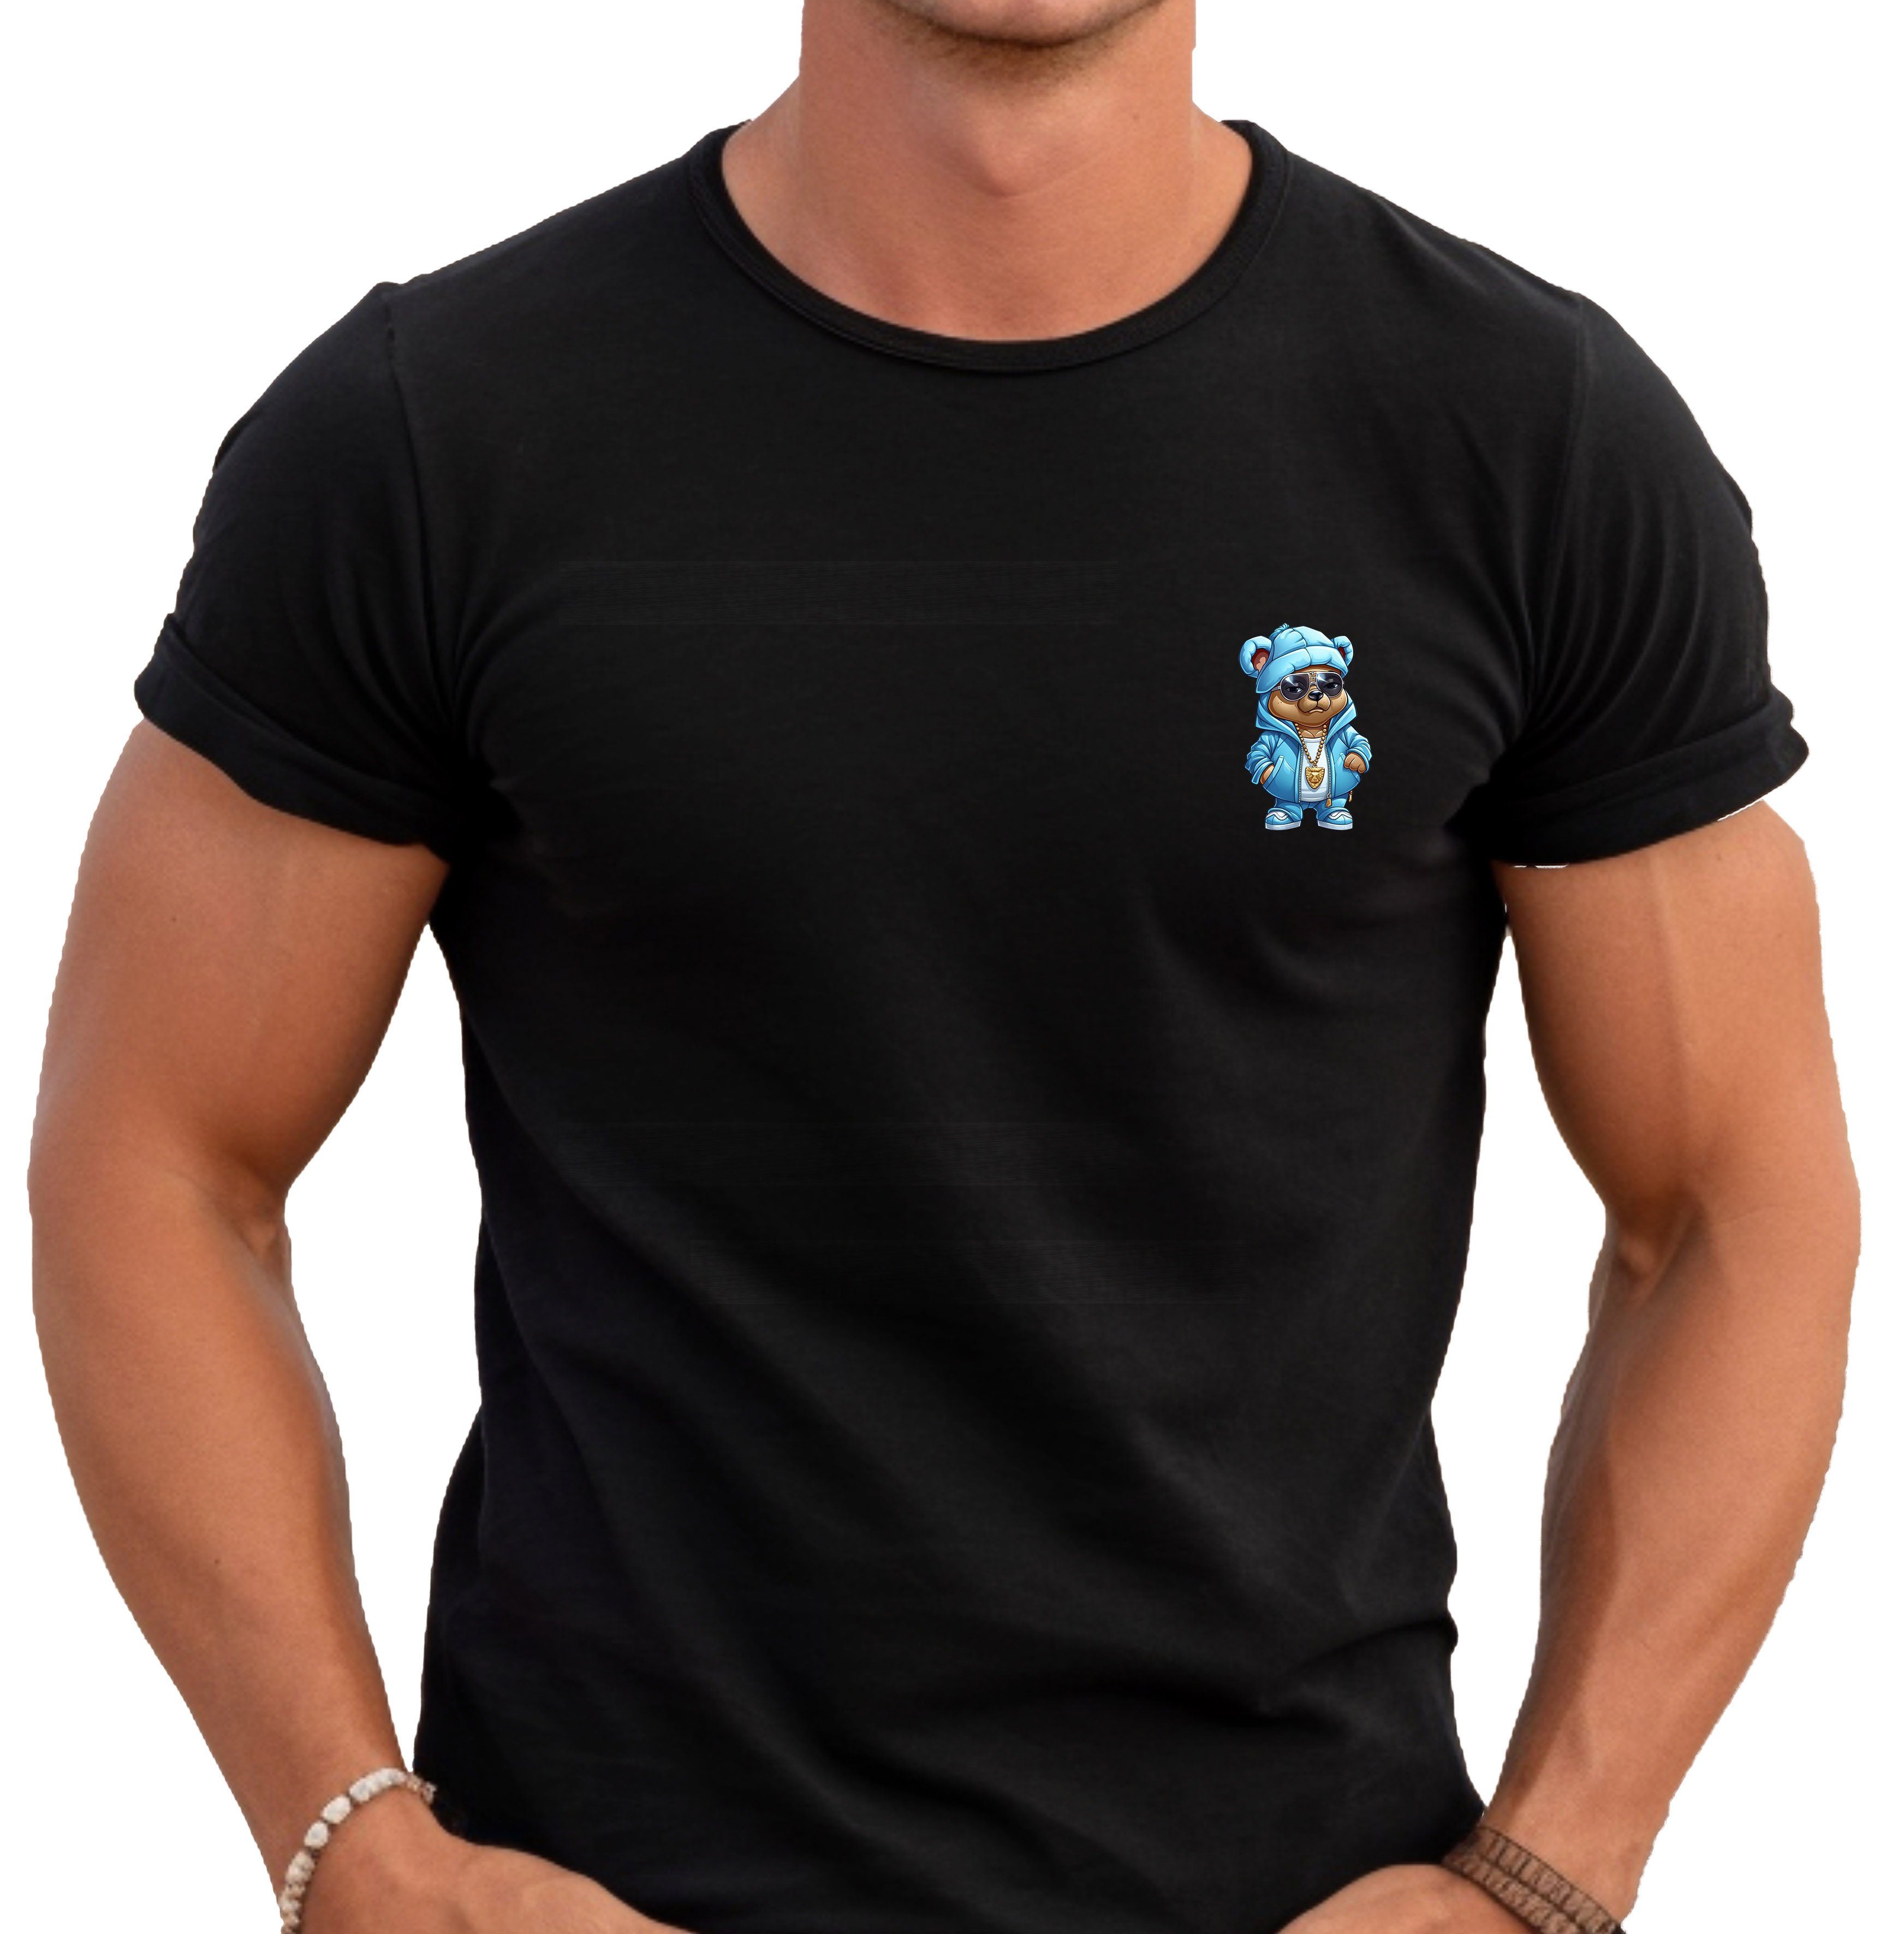 o.r.kl. Schwarz Bär T-Shirt mit Baumwolle 100% Banco Anzug blauem Gangster